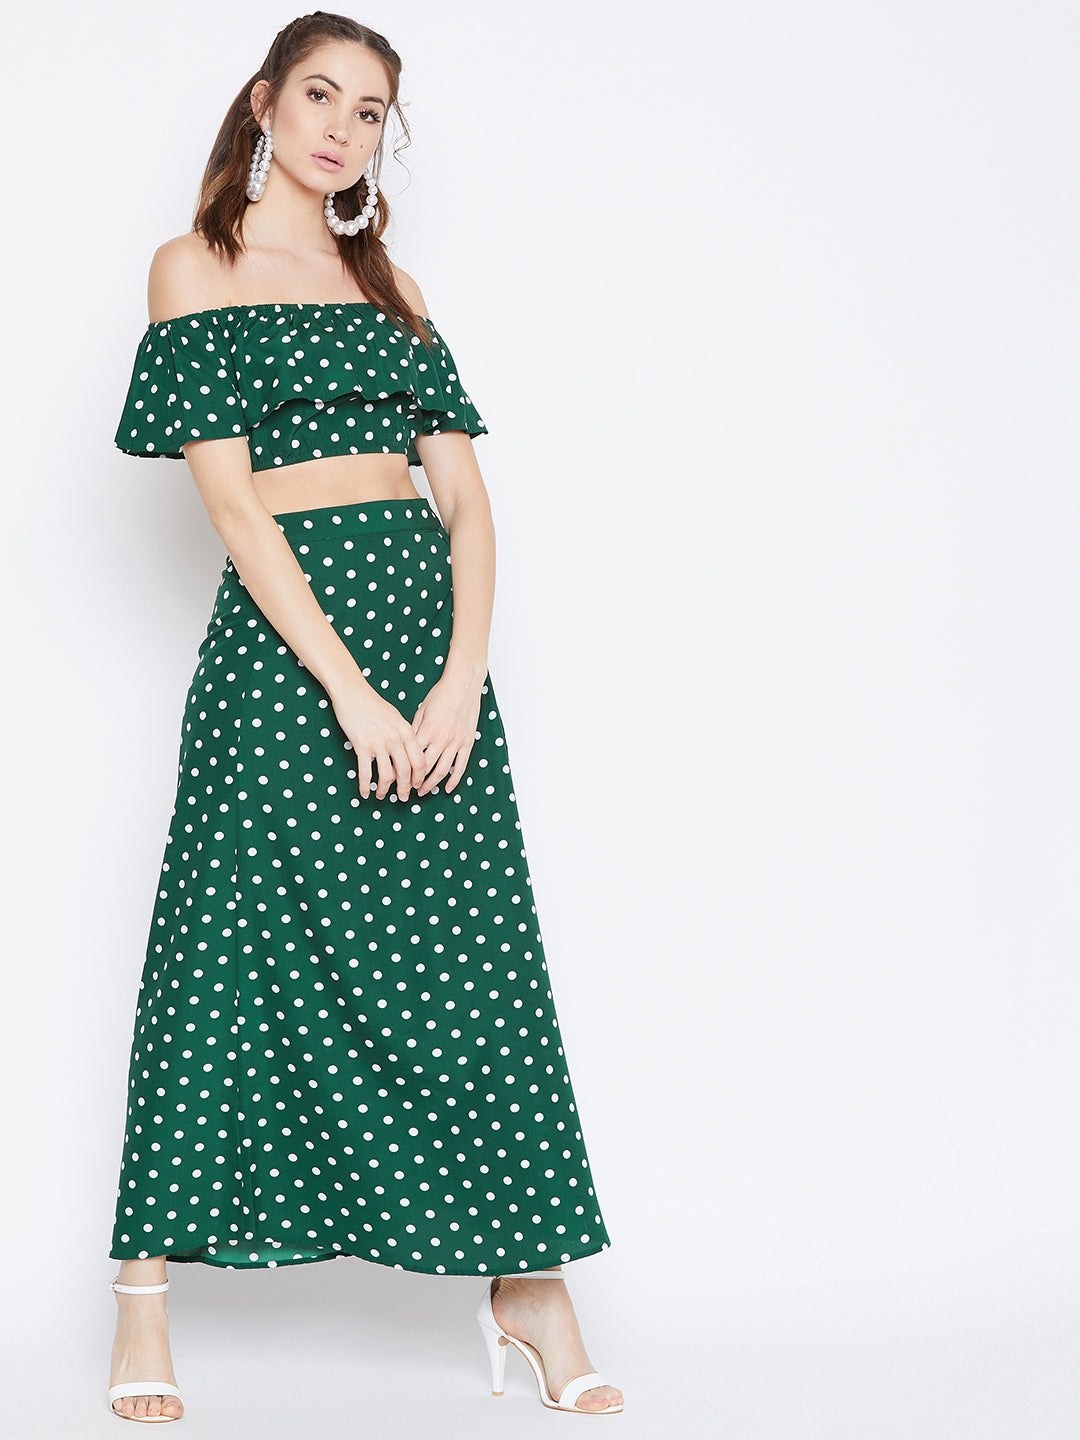 Berrylush Women Green & White Polka Dot Printed Off-Shoulder Co-Ordinate Maxi Dress